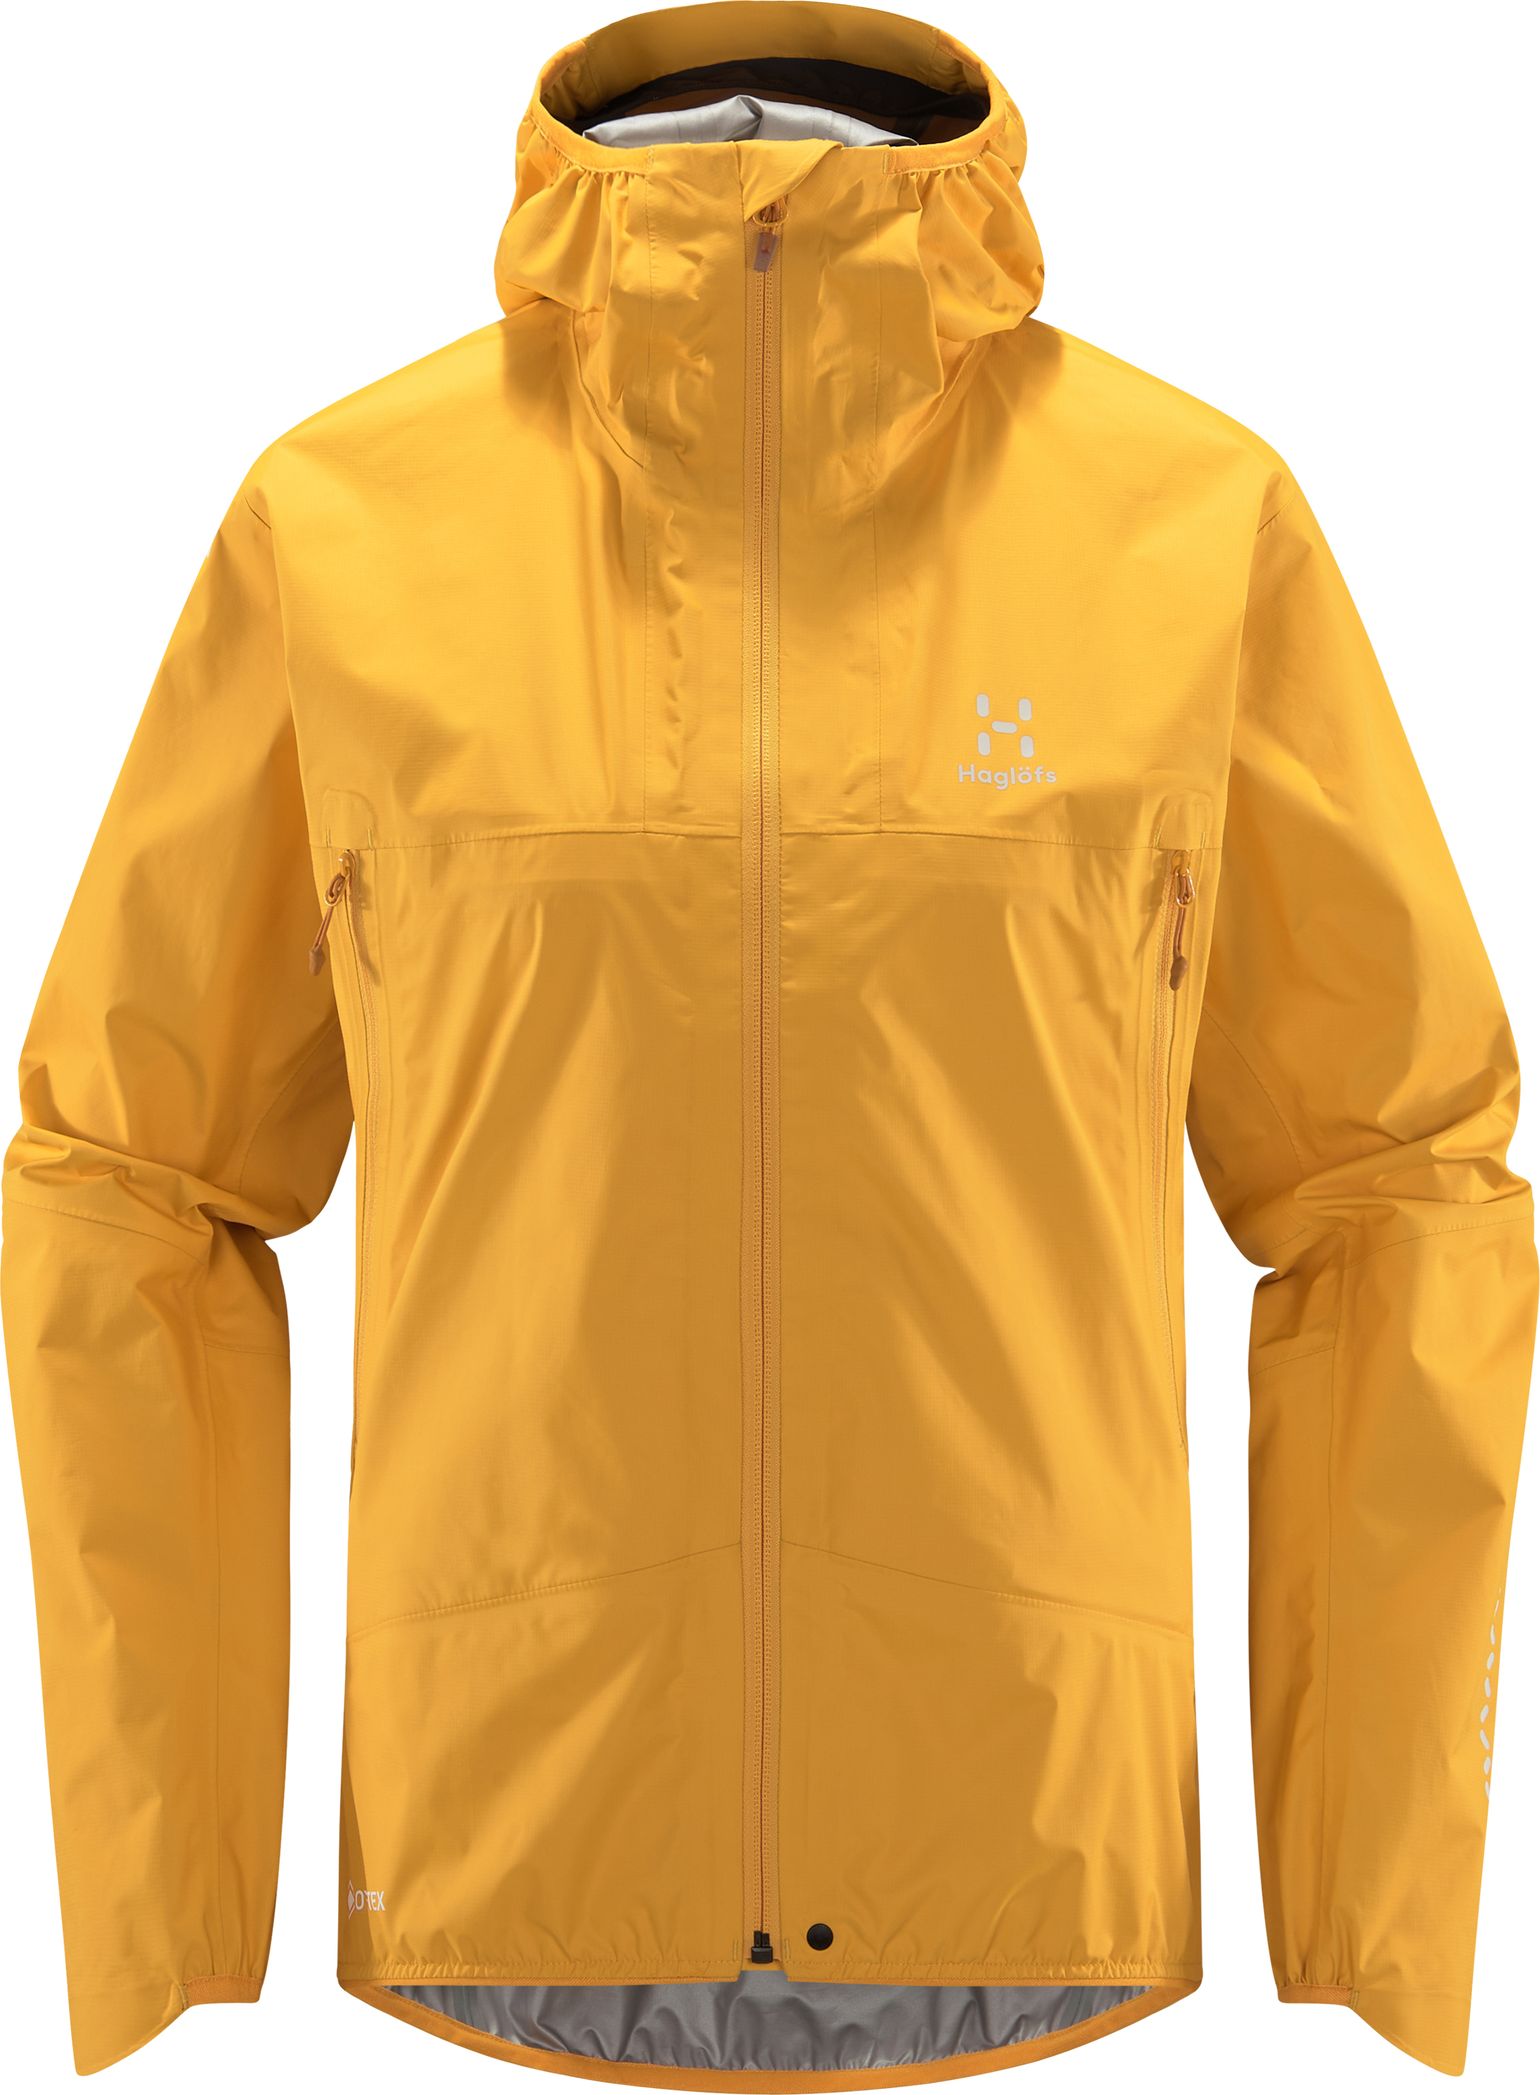 Women's L.I.M Gore-Tex II Jacket Sunny Yellow